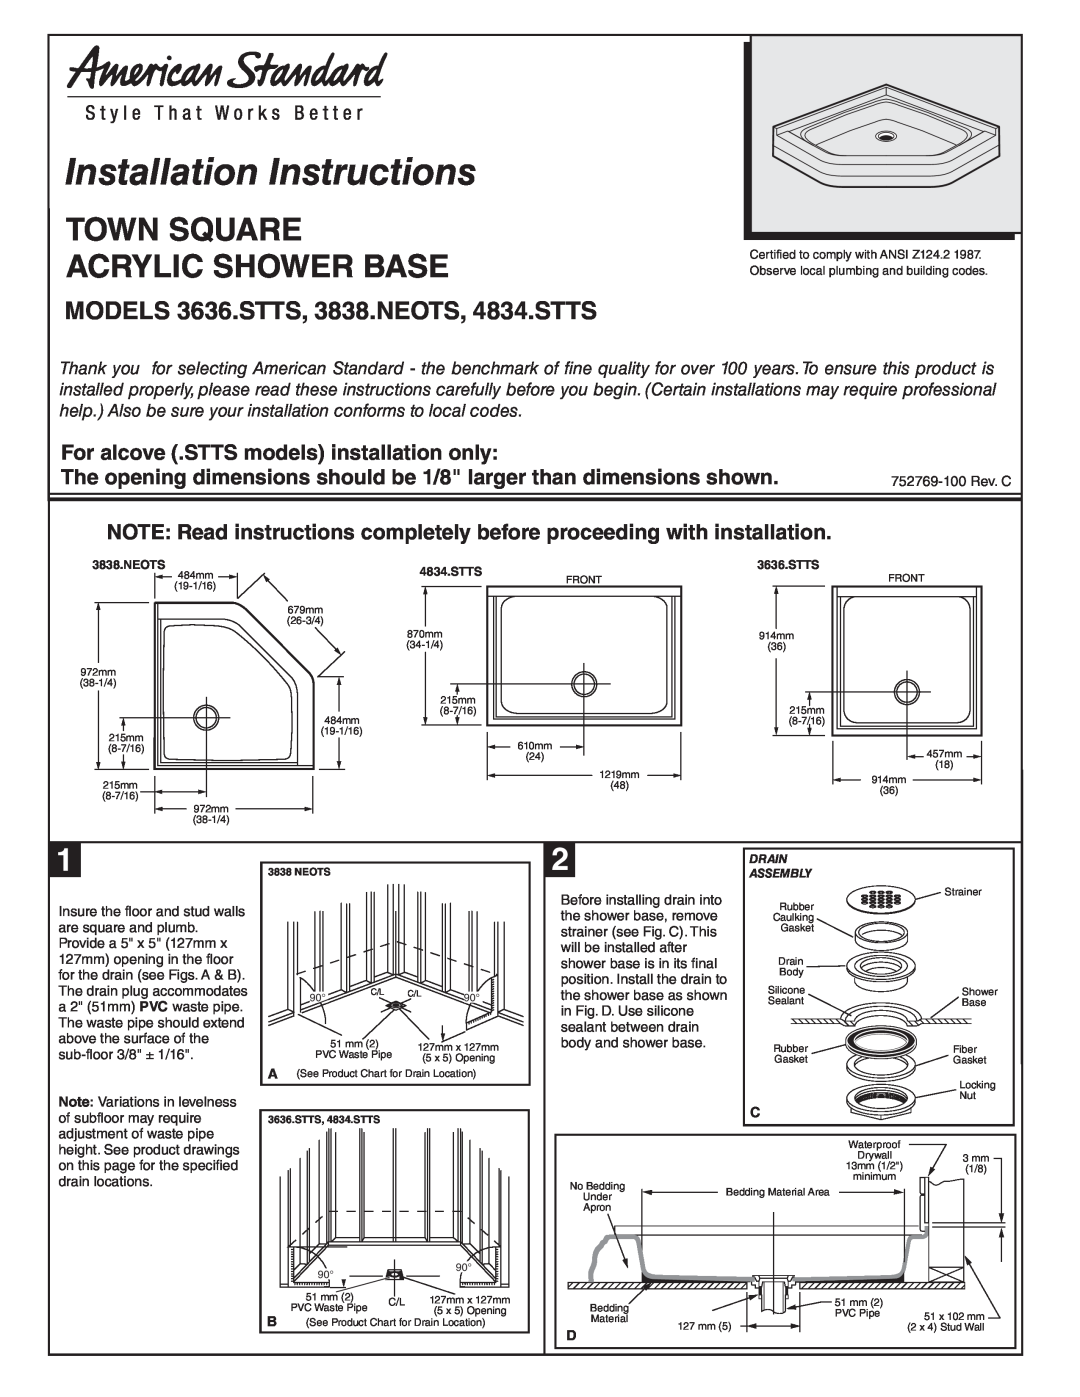 American Standard 3838.NEOTS installation instructions Installation Instructions, Town Square Acrylic Shower Base 